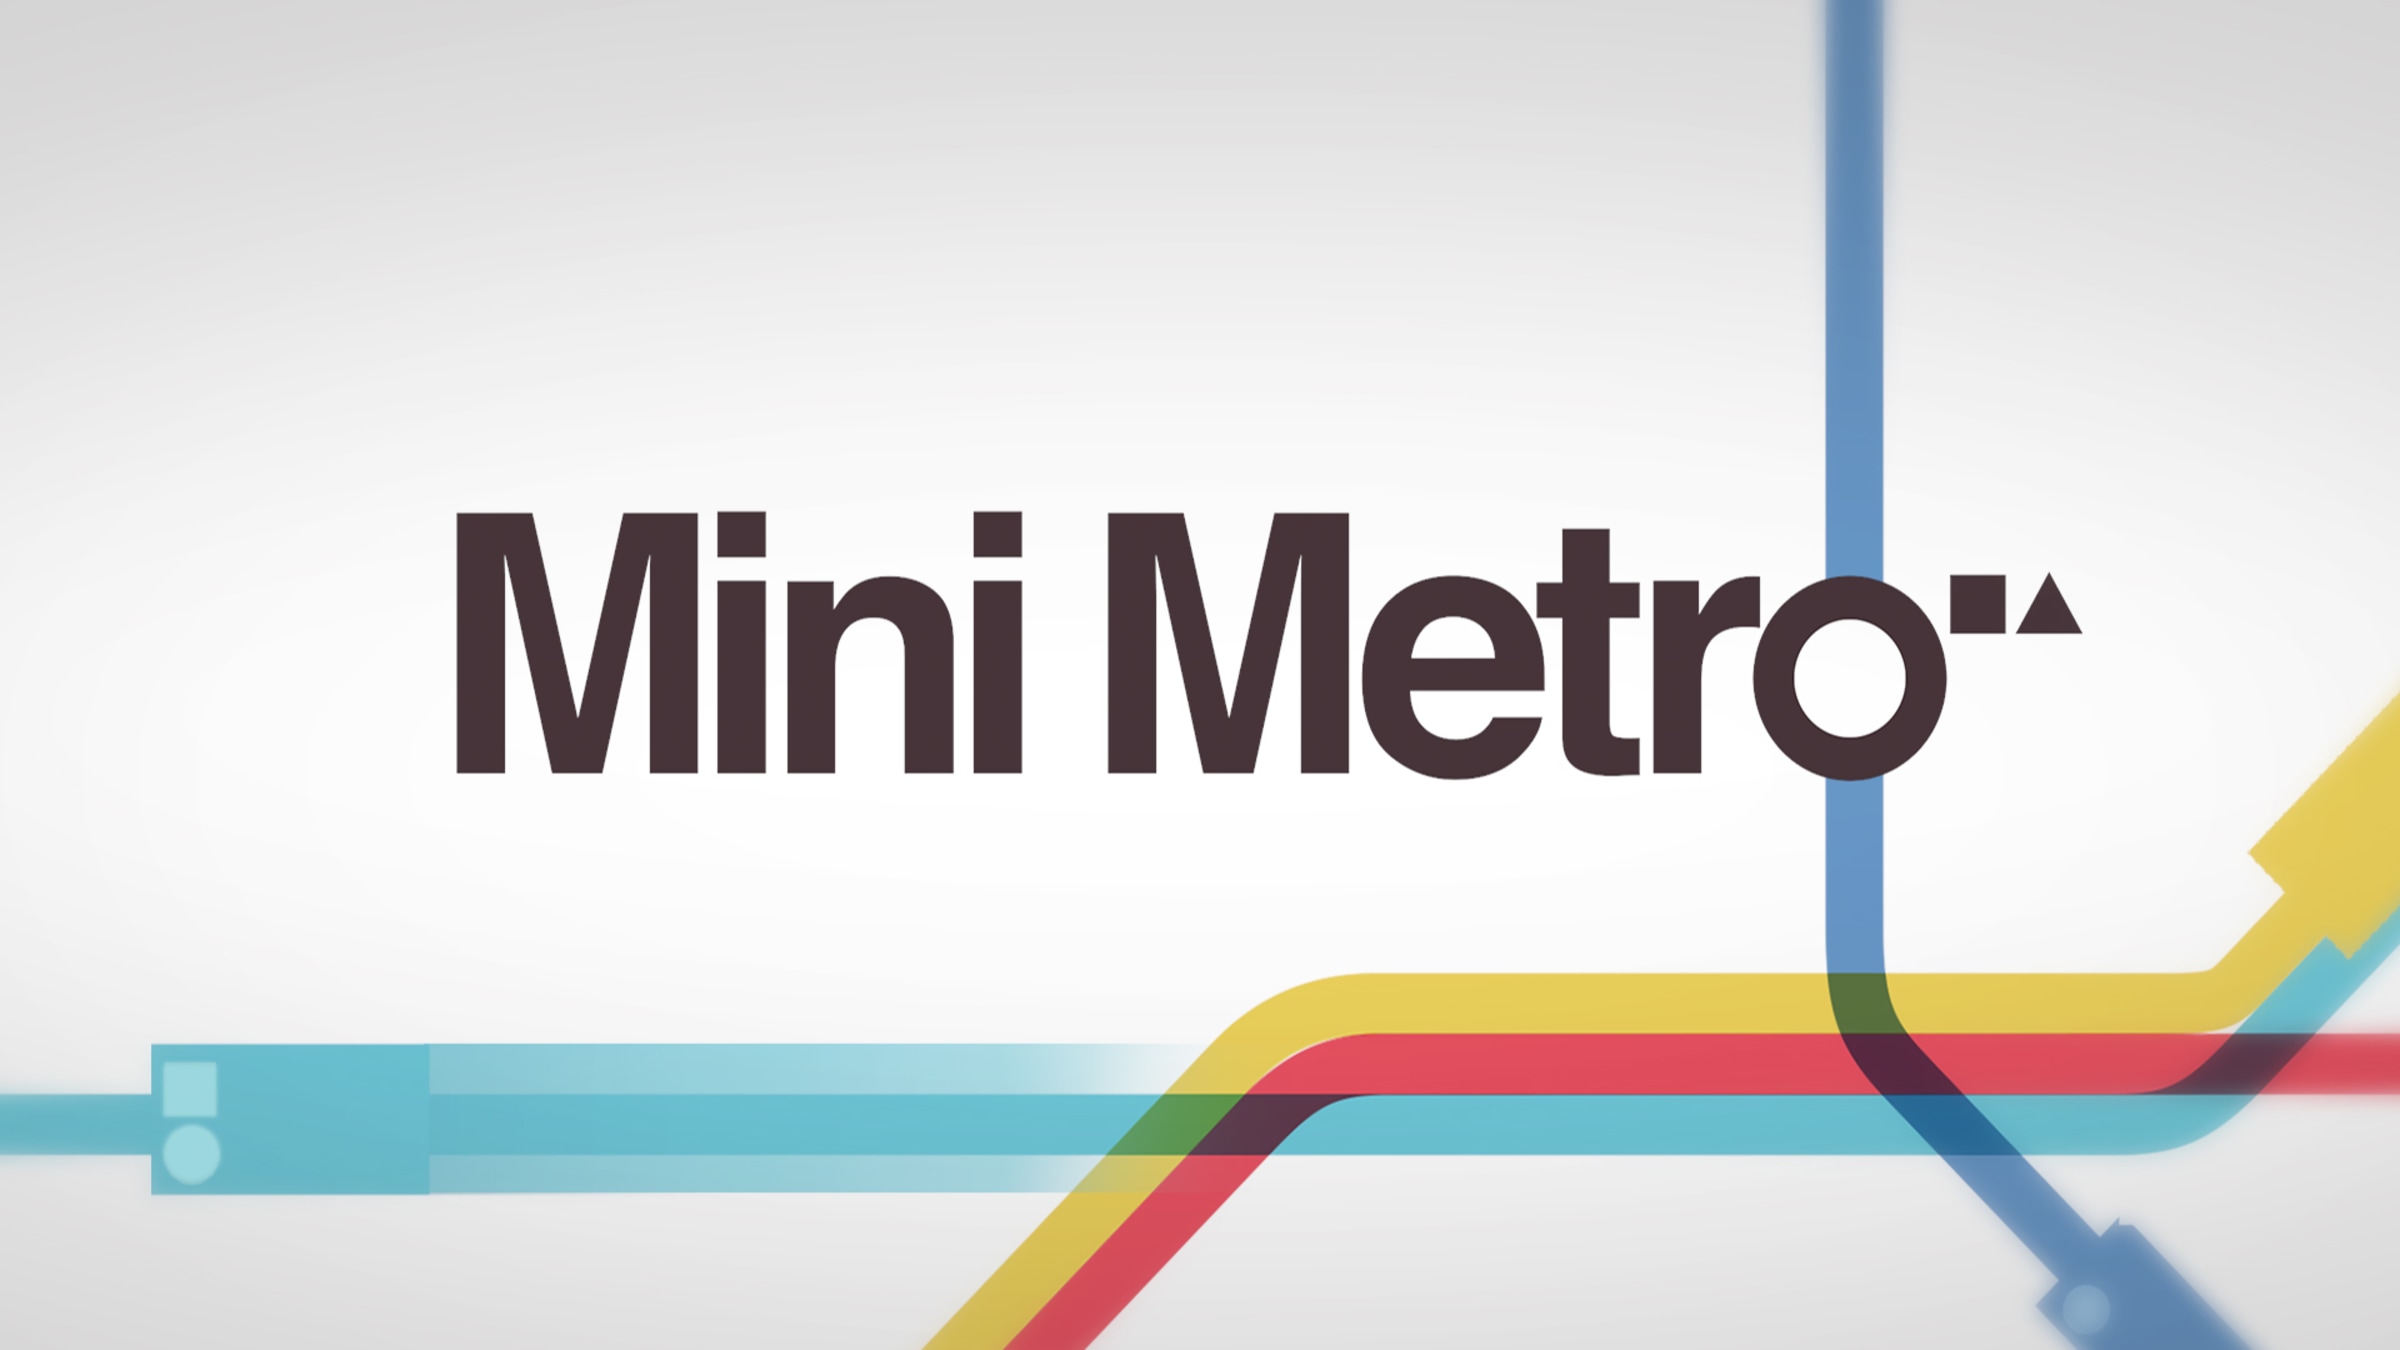 Play Mini Metro London